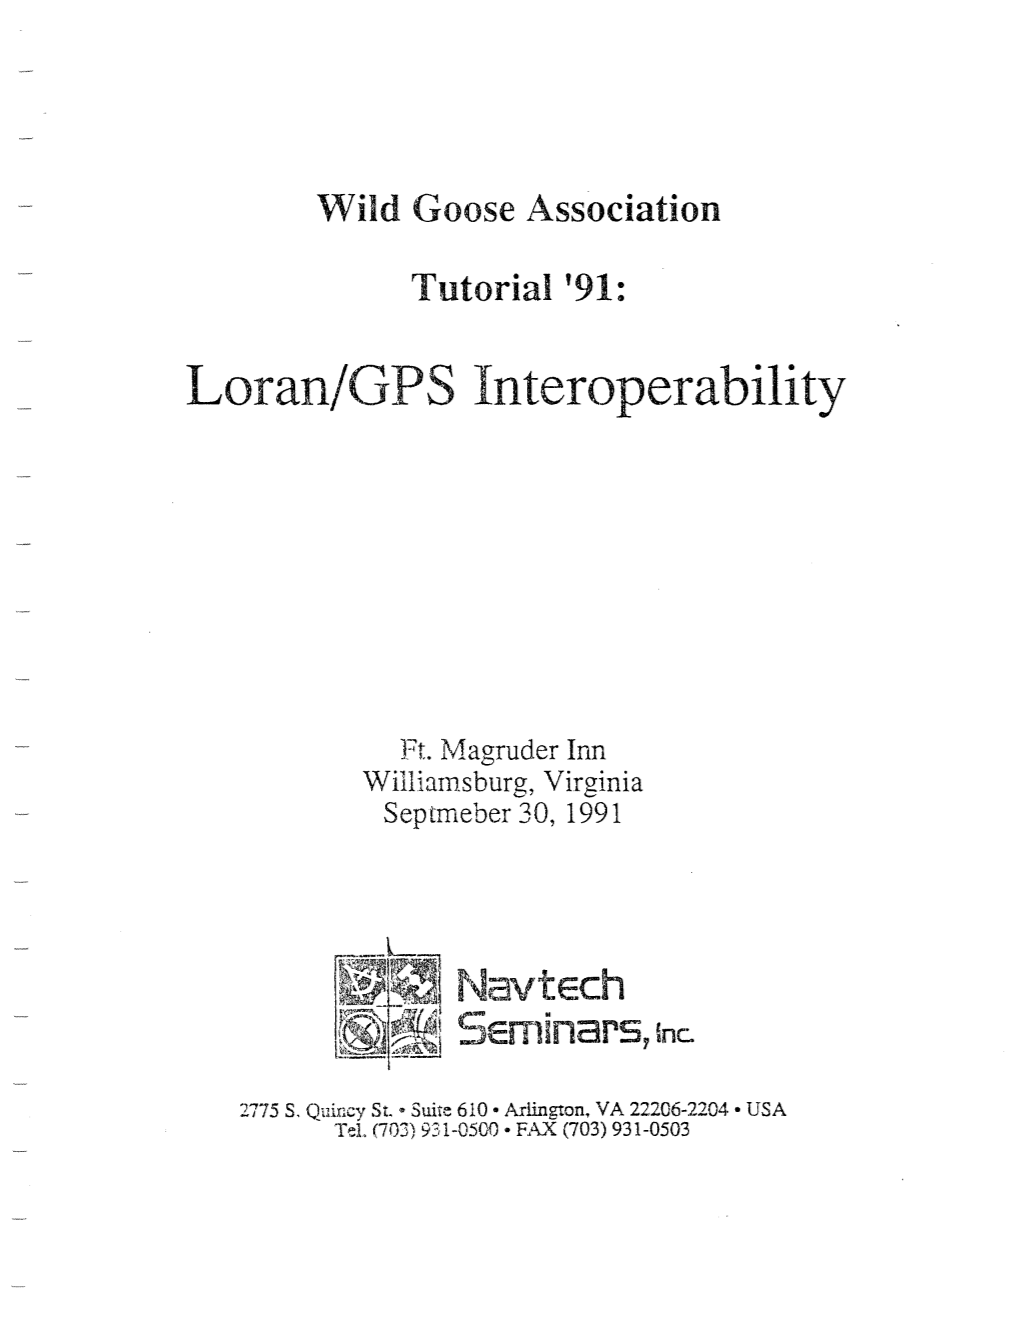 Loran-C / GPS Interoperability 1991